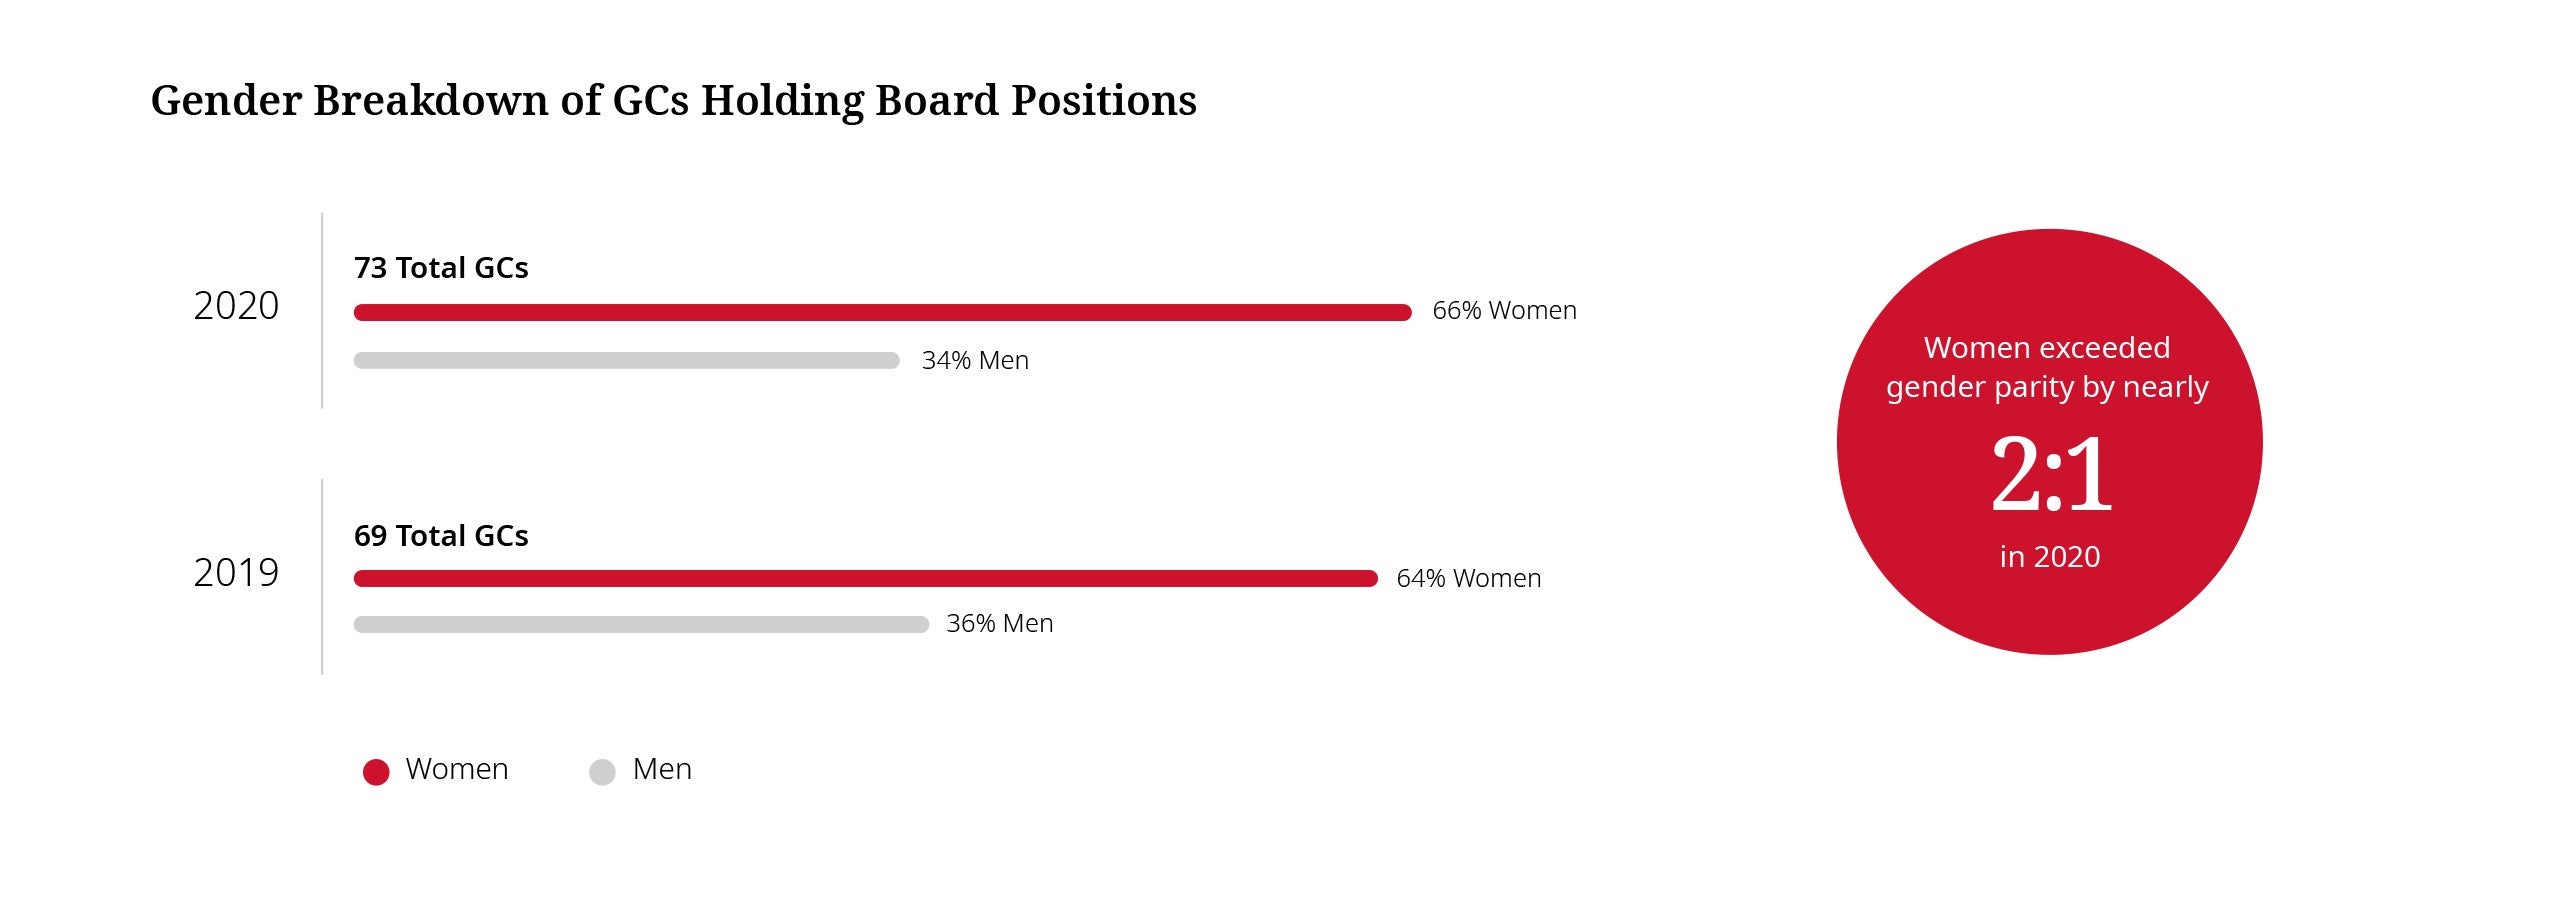 Gender breakdown of GCs holding board positions